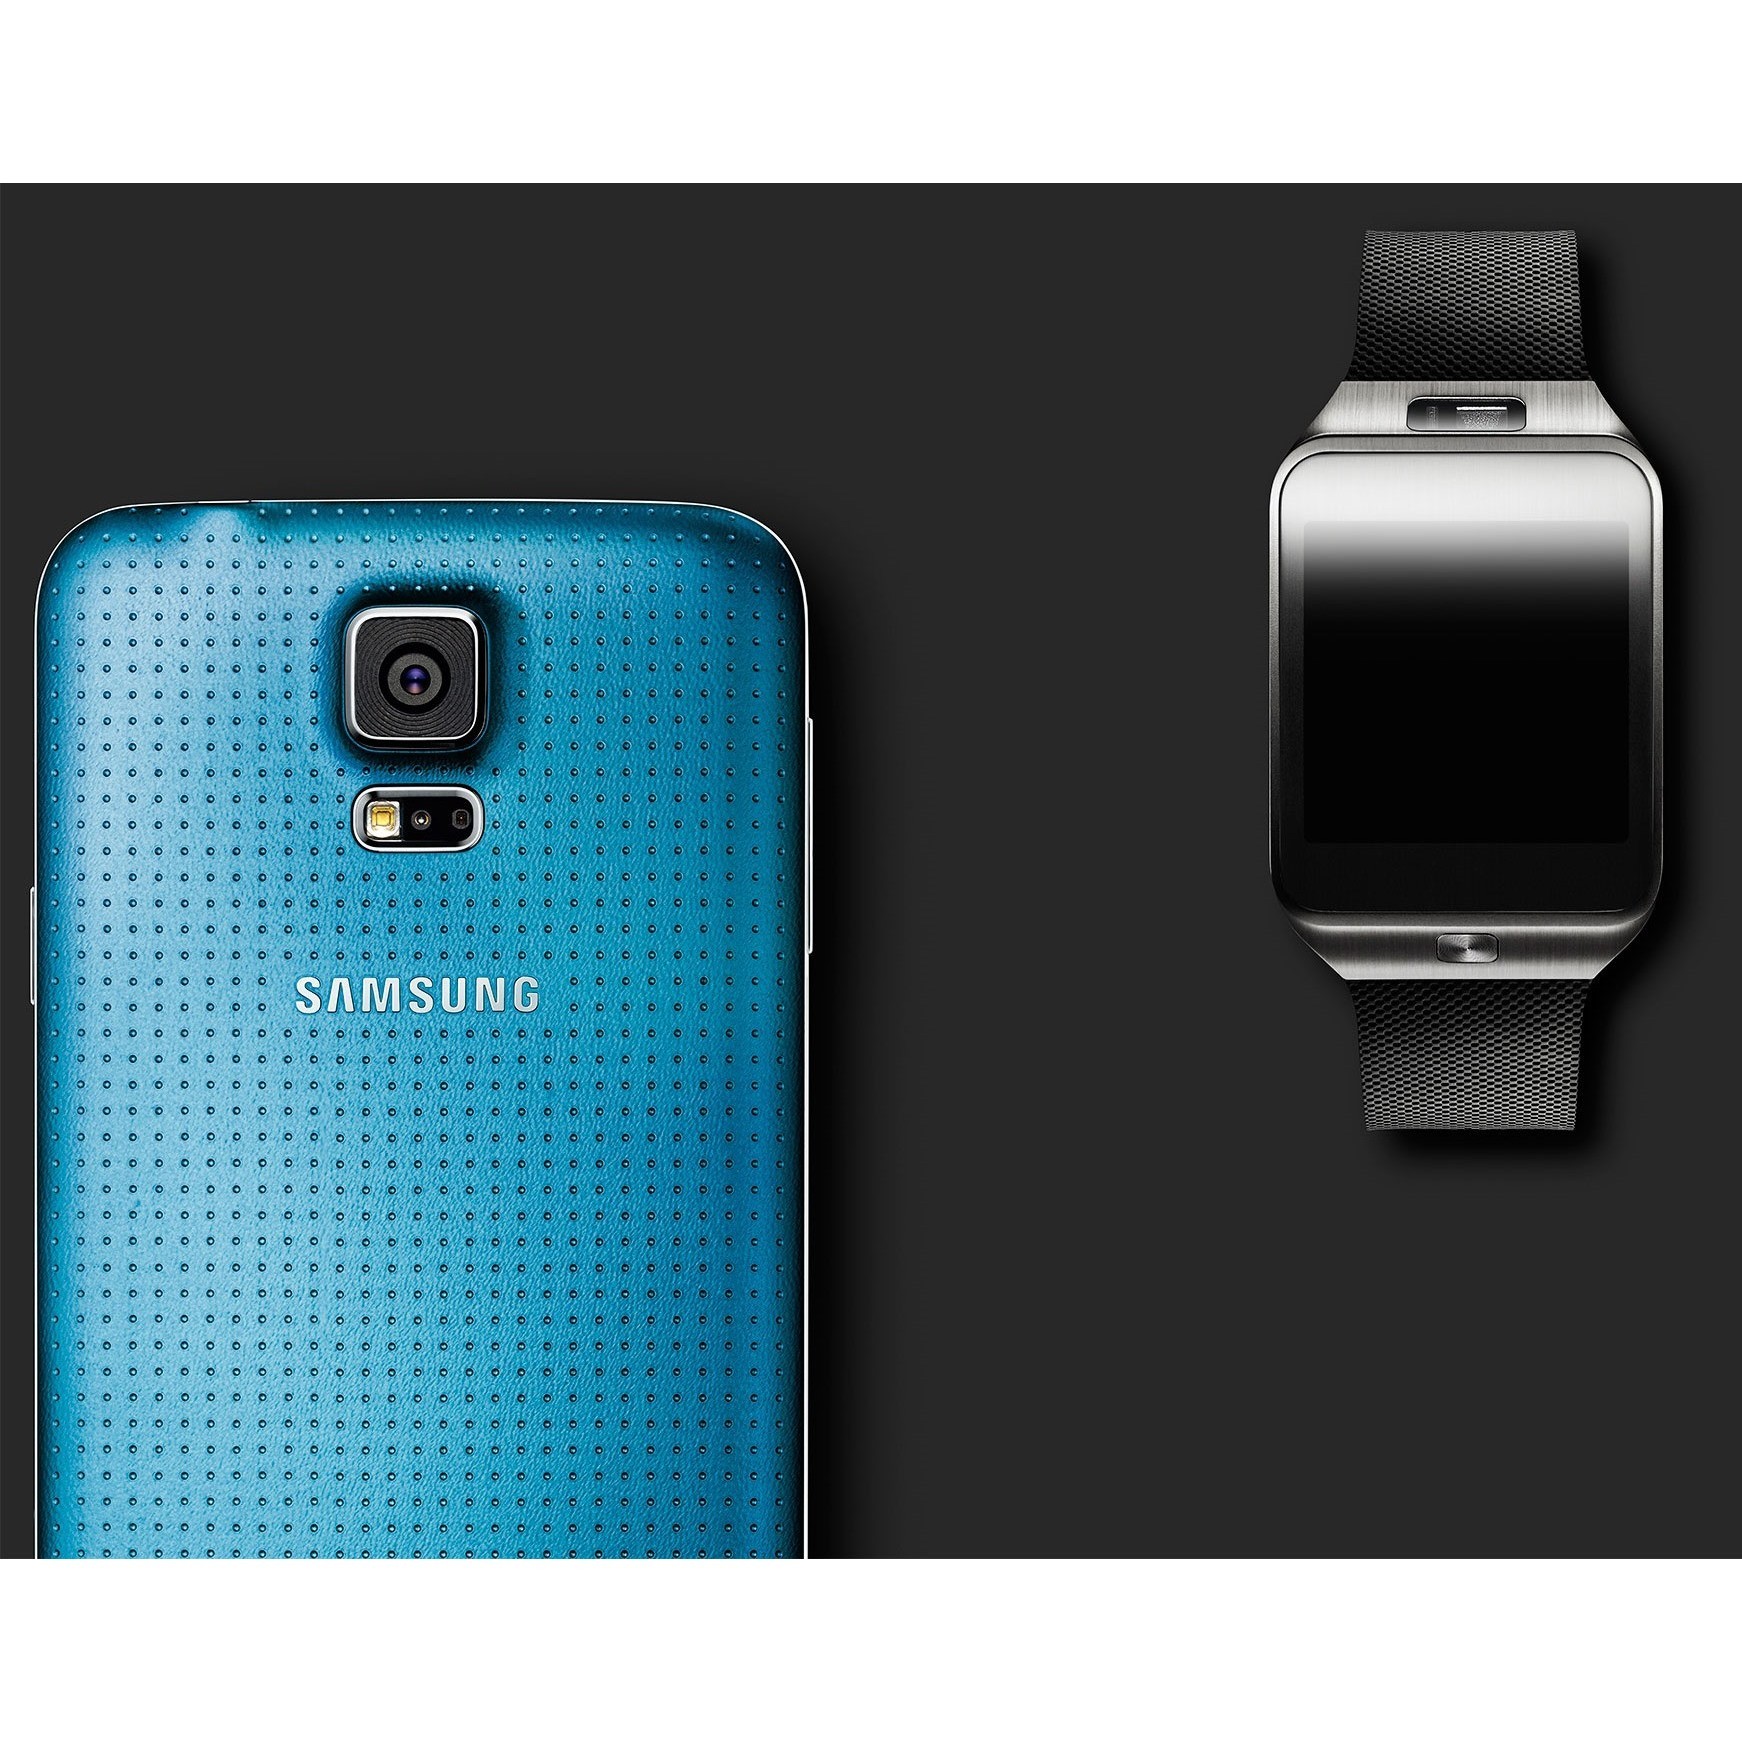 Galaxy s 25. Samsung Galaxy s5 Blue. Самсунг галакси а5. Samsung Galaxy s5 2. Samsung Gear s5.